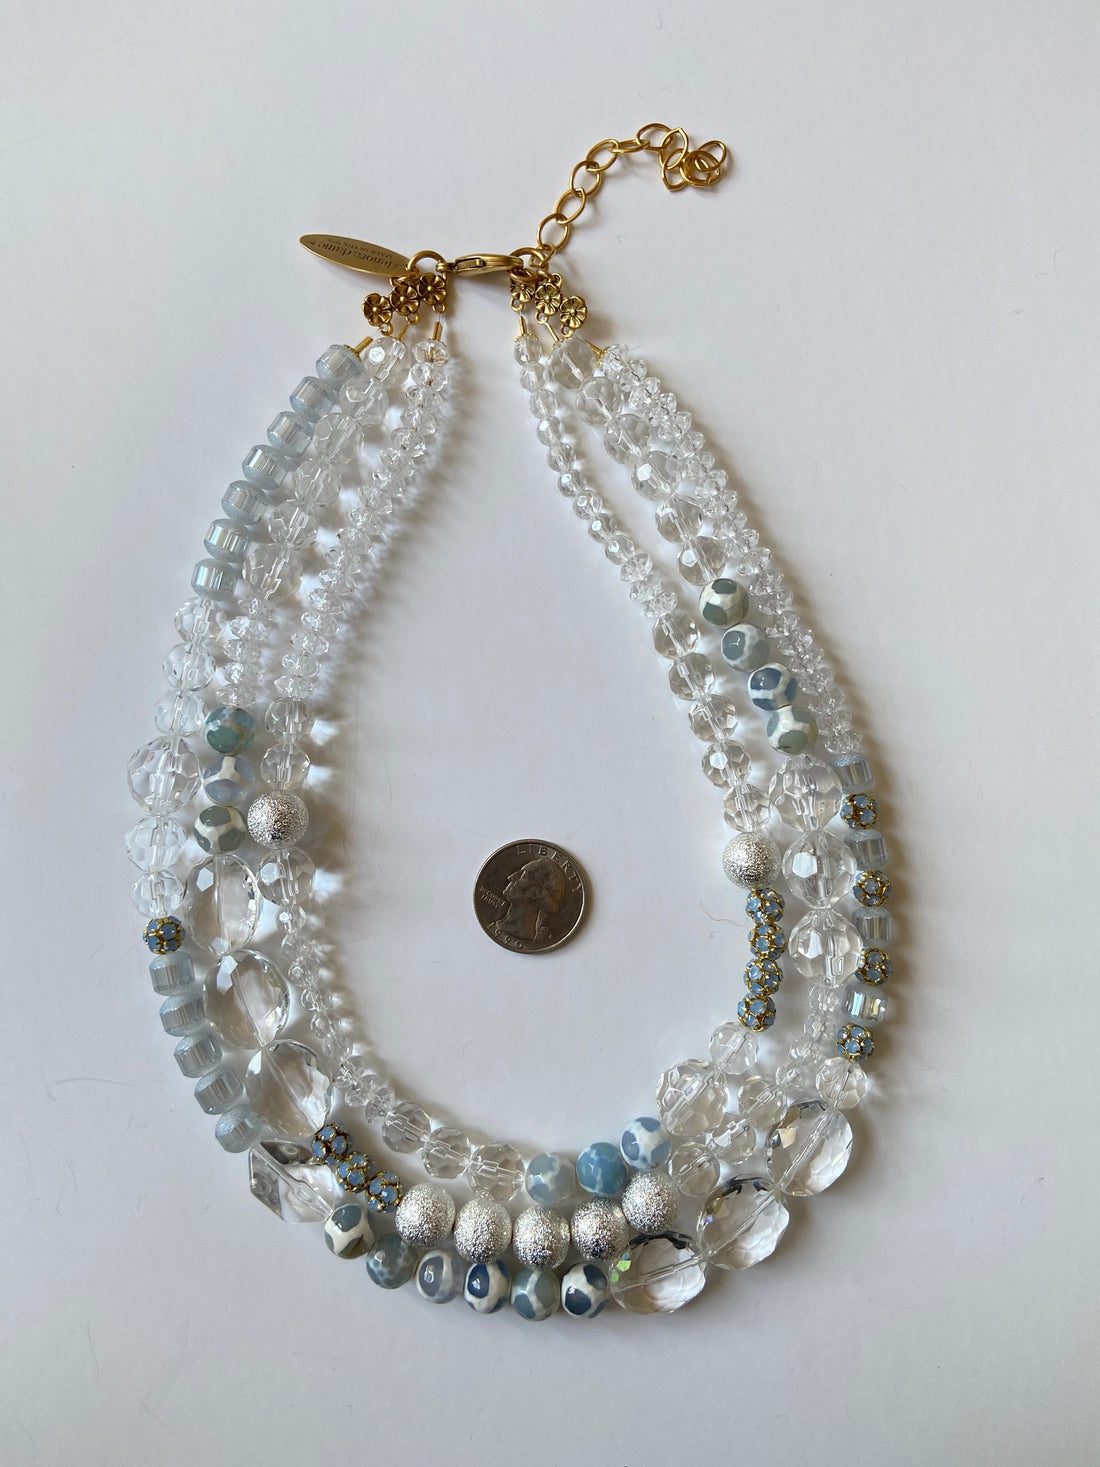 Lenora Dame Frosty Multi-Strand Necklace - Holiday Jewelry - Crystal Necklace